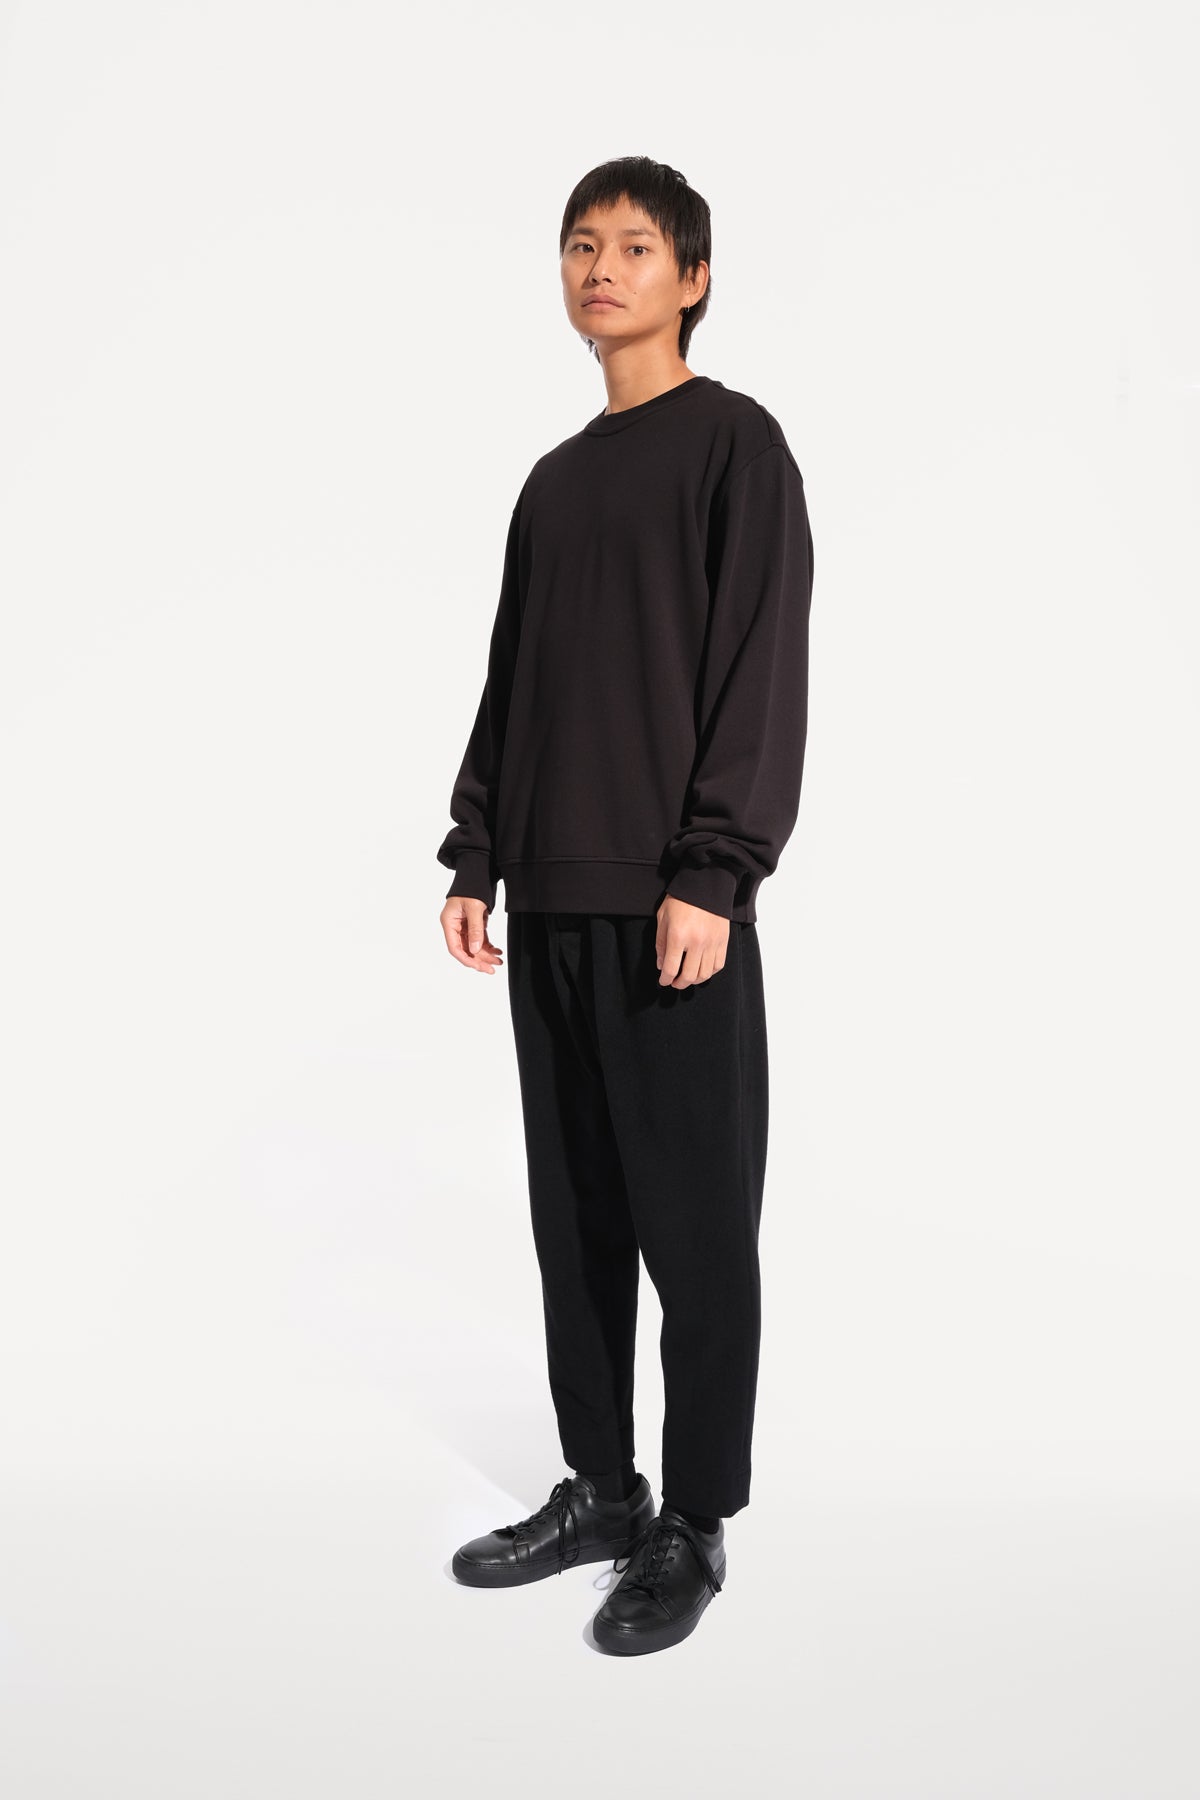 oftt - 02- reversible sweatshirt - black - organic cotton fleece - image 2